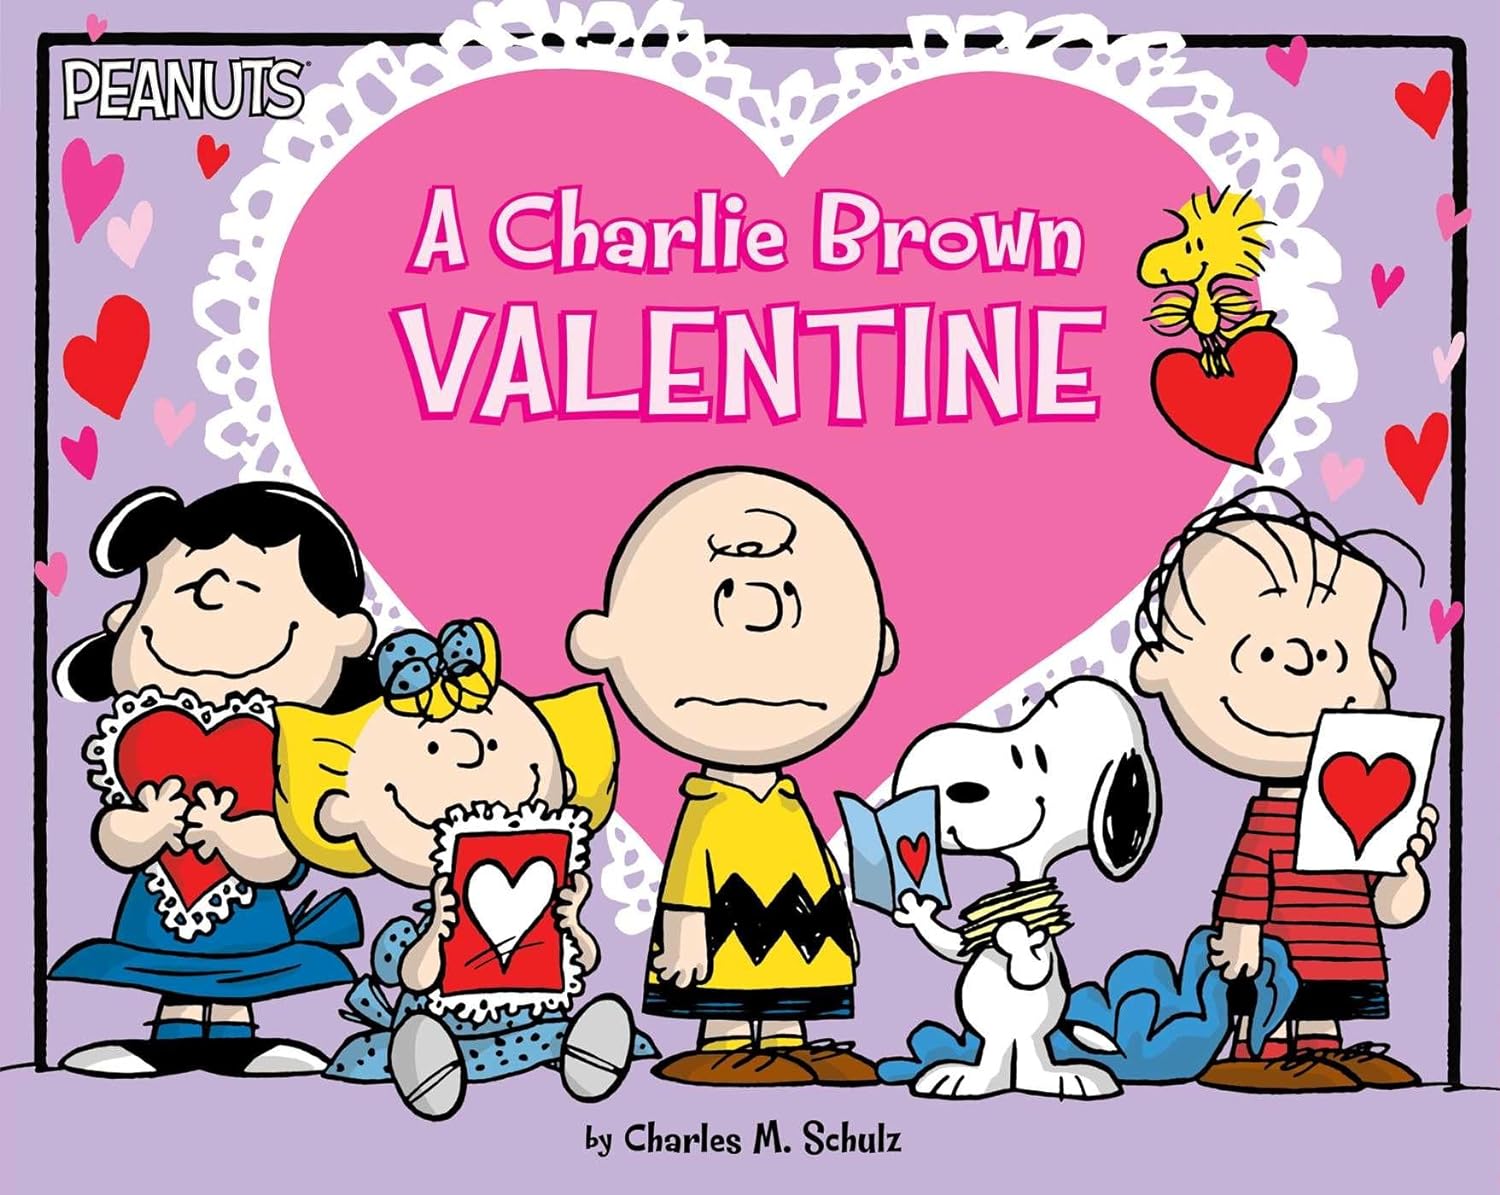 A Charlie Brown Valentines